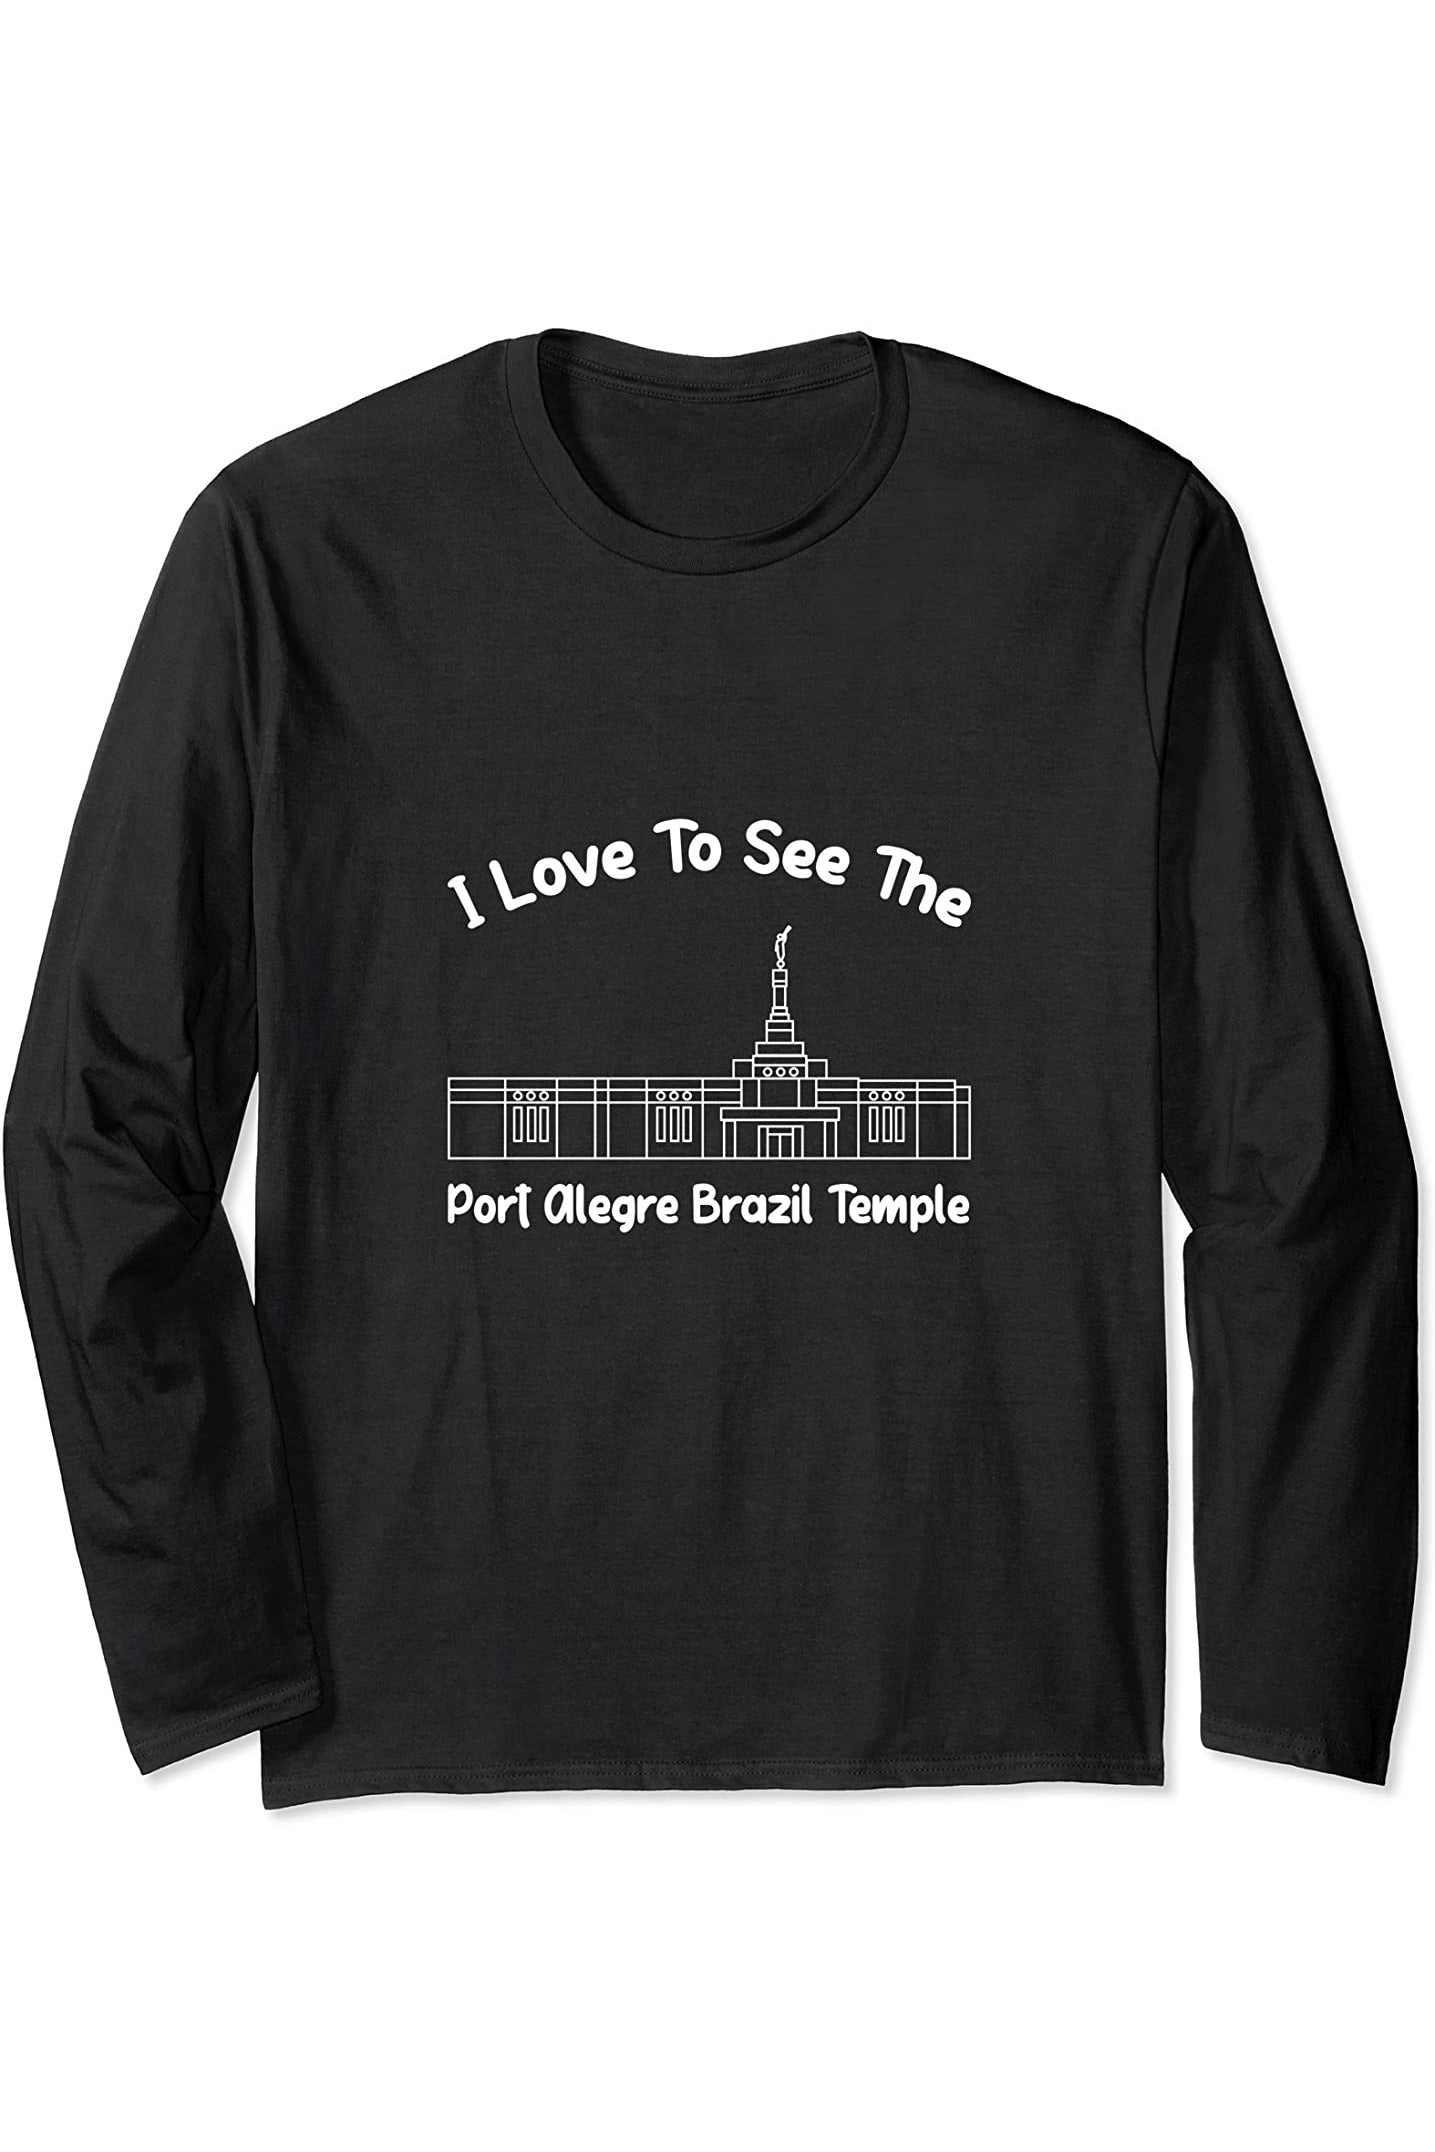 Porto Alegre Brazil Temple Long Sleeve T-Shirt - Primary Style (English) US